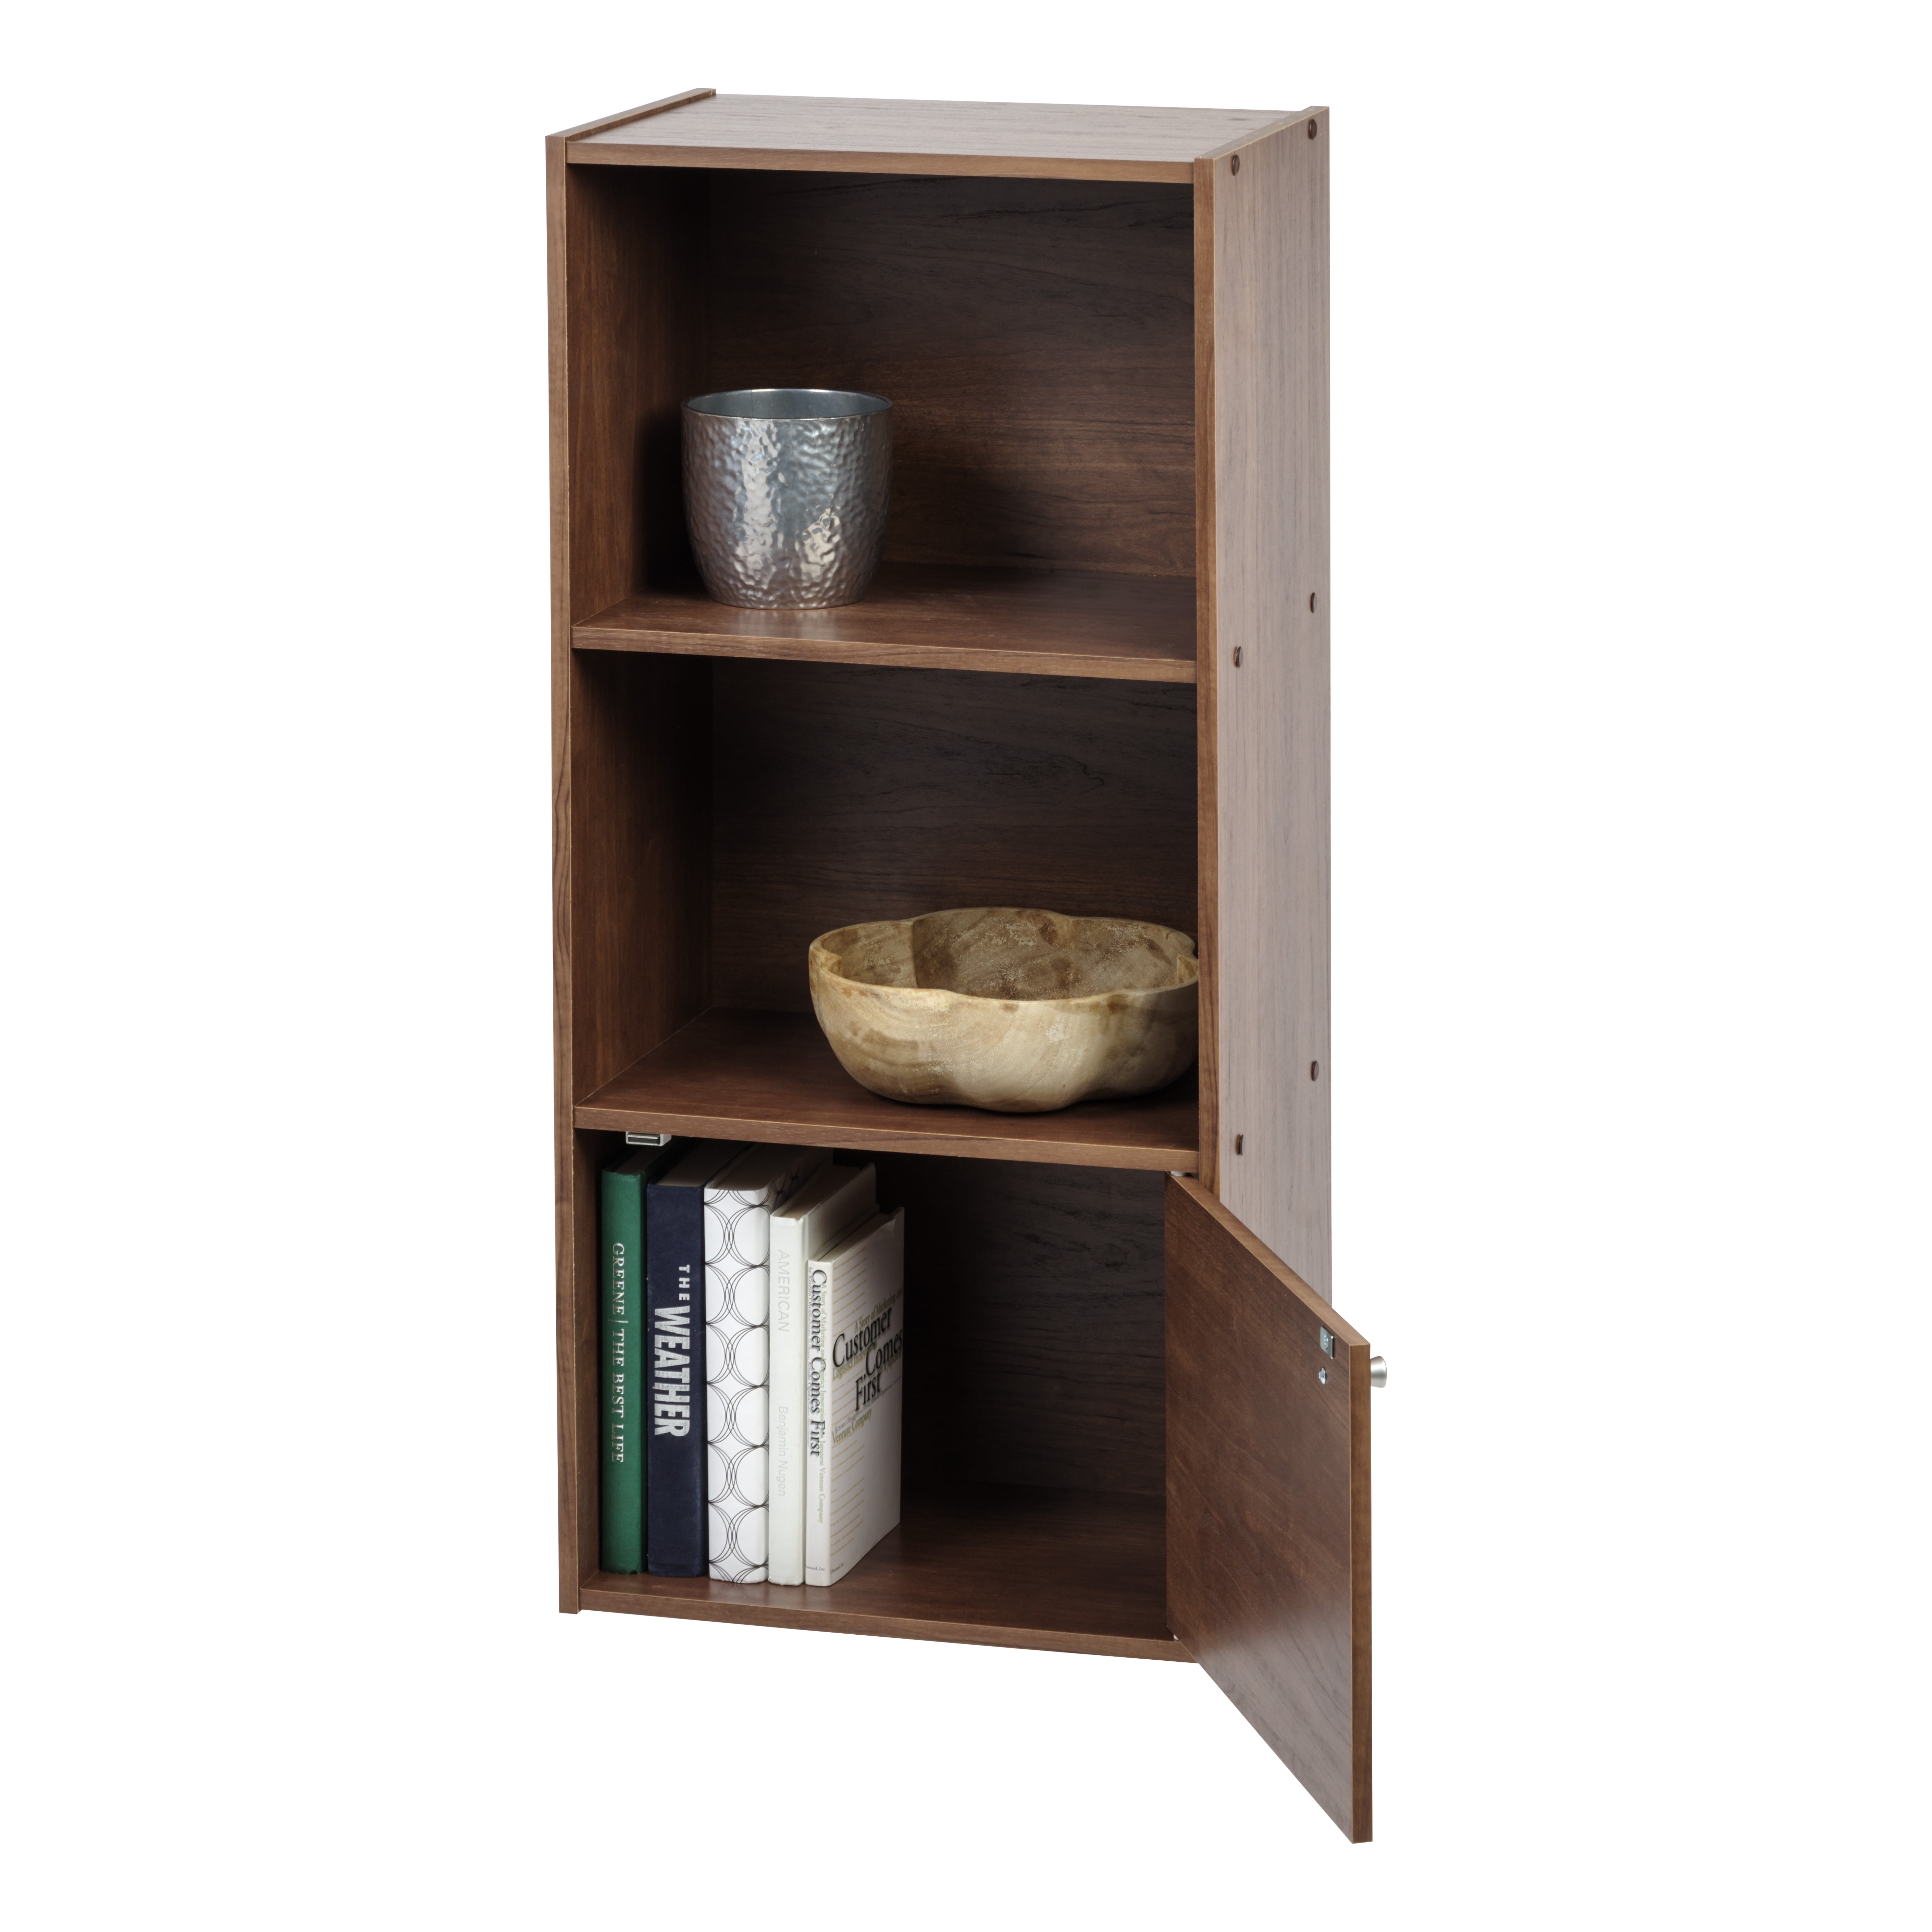 3 4 Tiers Bookshelf Bookcase Stand Free Shelf Shelves Storage Display Unit Wood 